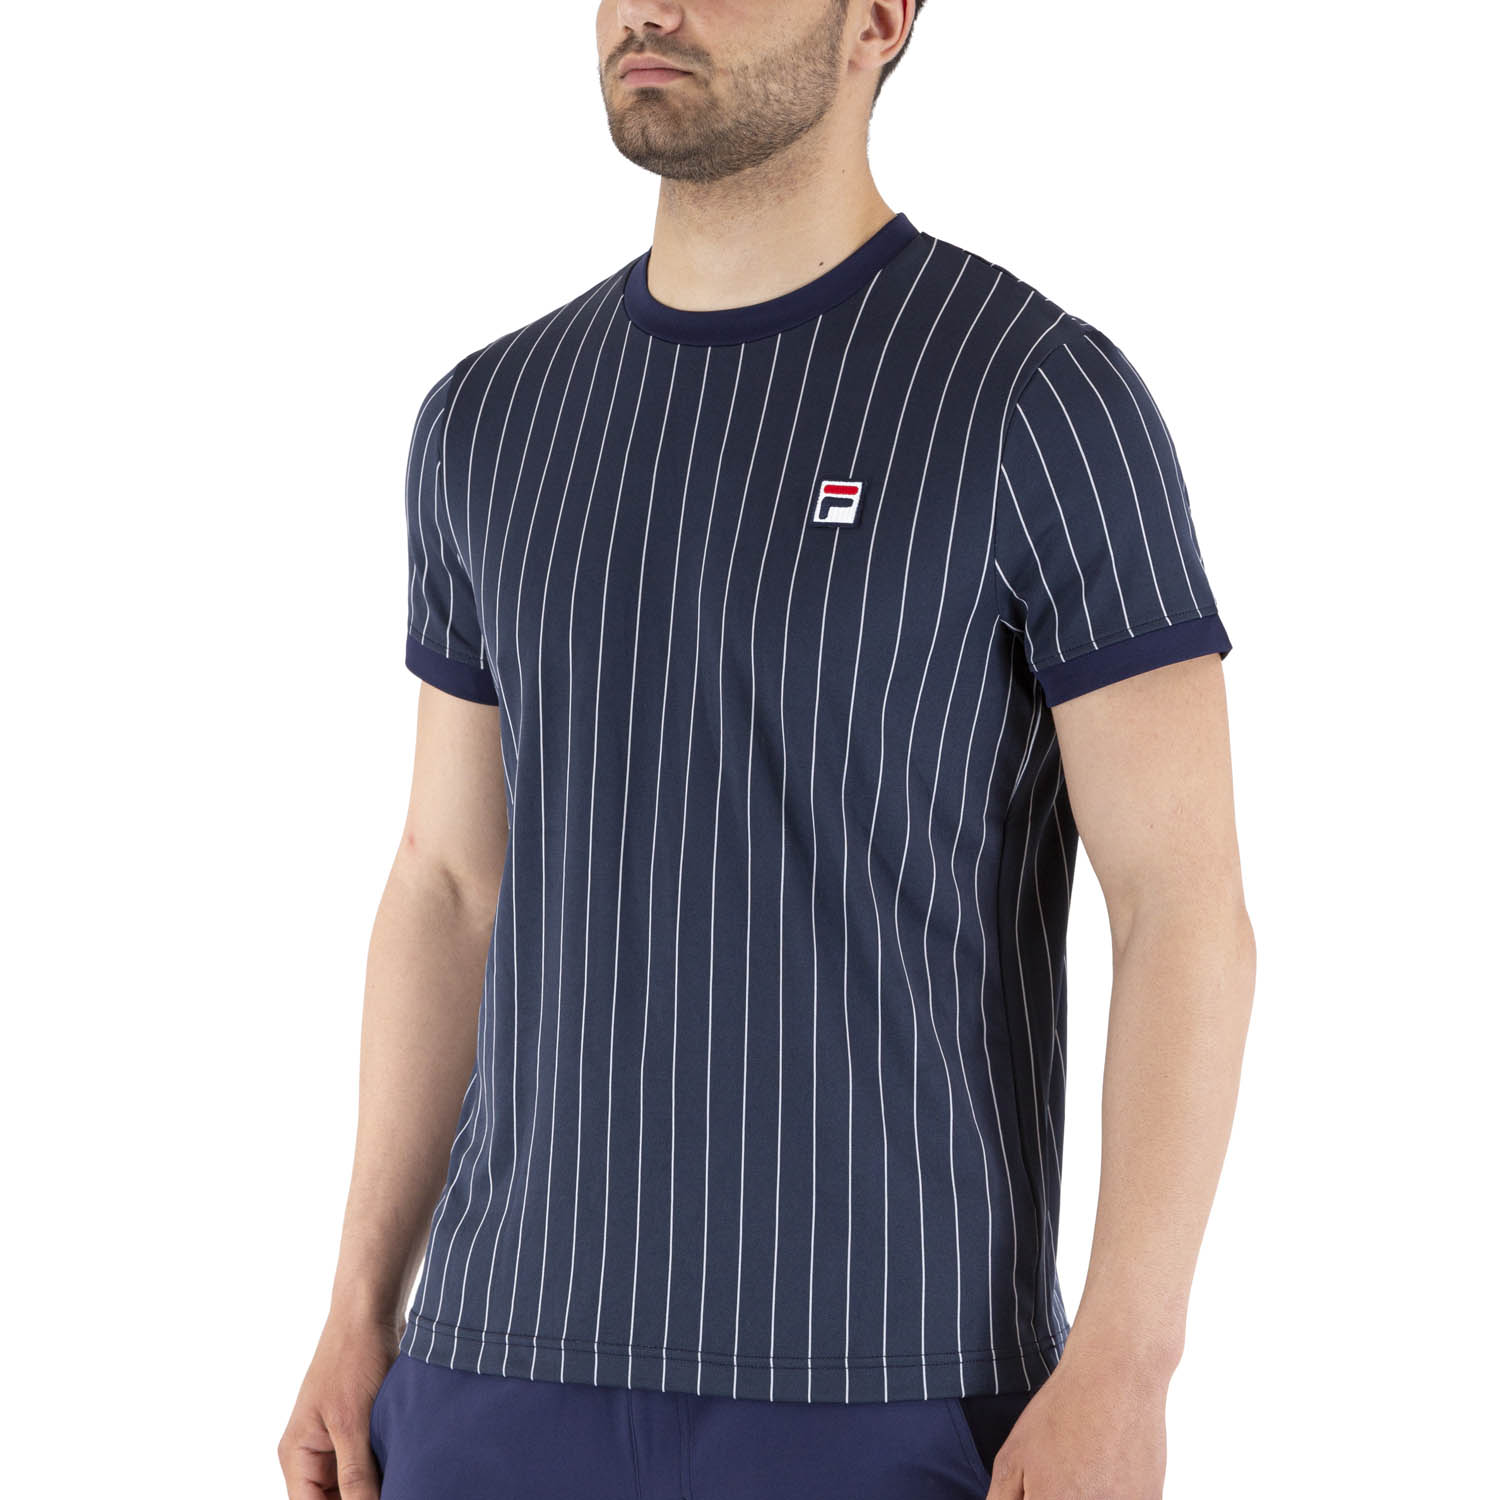 Fila Stripes Camiseta - Navy/White